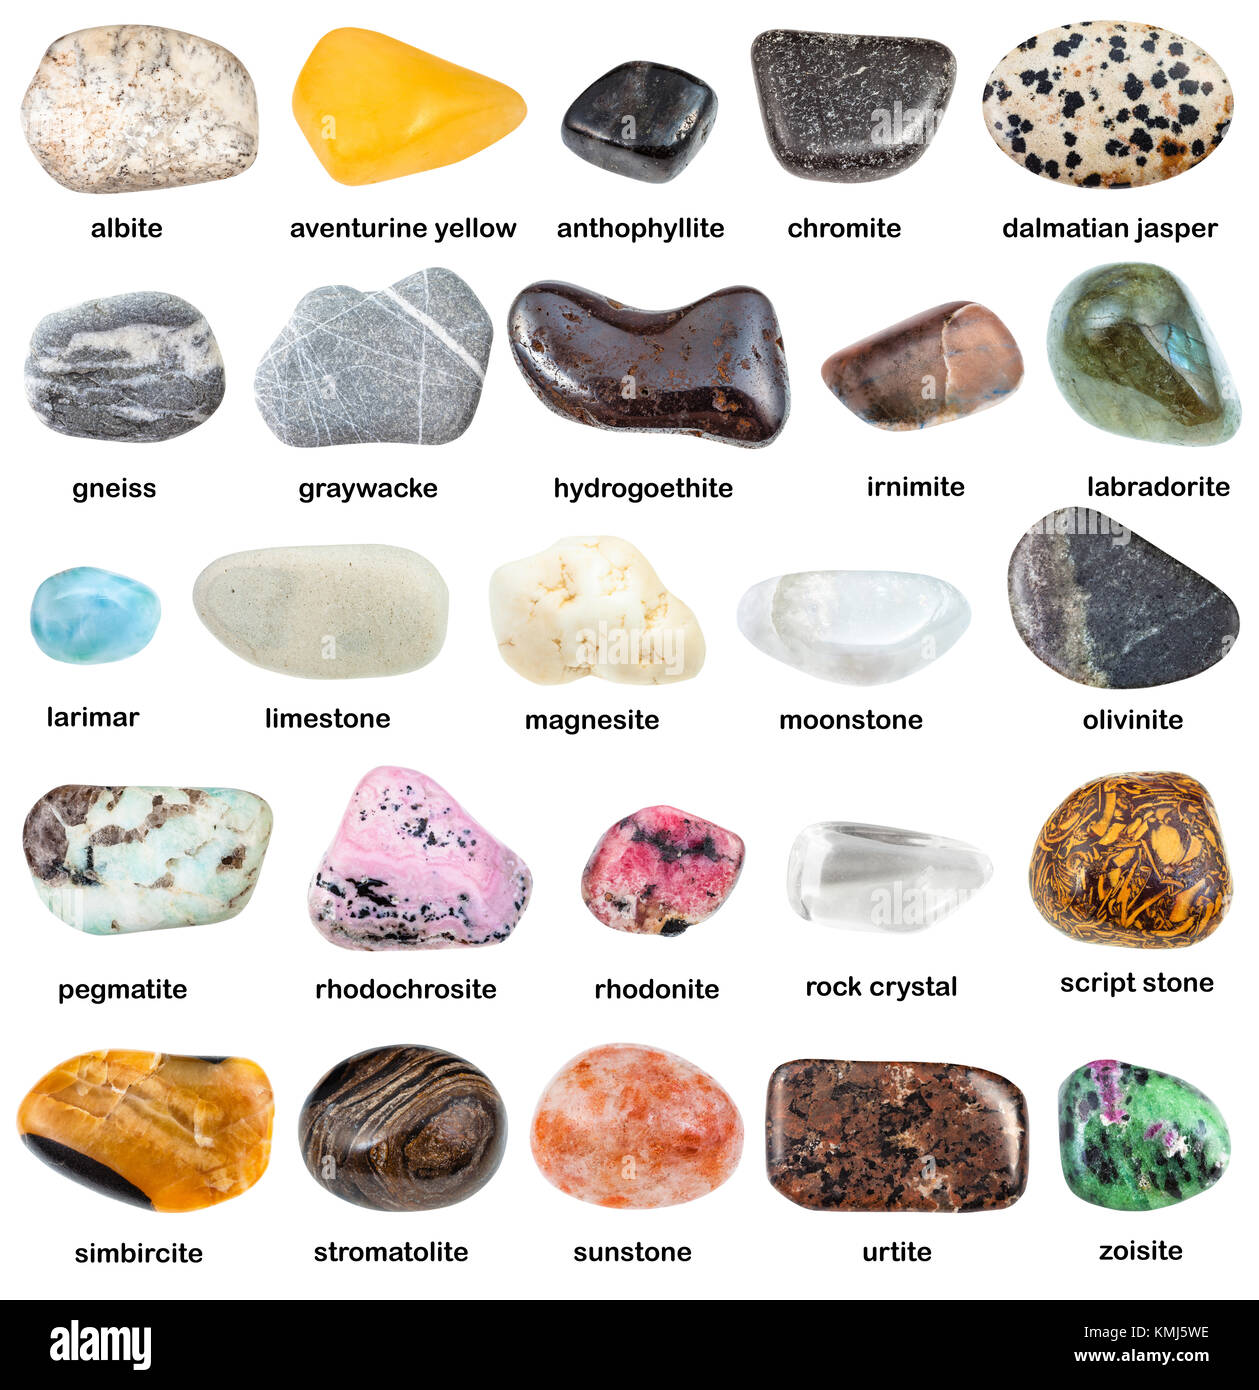 https://c8.alamy.com/compes/kmj5we/coleccion-de-piedras-preciosas-minerales-naturales-con-nombre-albita-pegmatita-urtite-olivinite-cromita-stromatolite-irnimite-sunstone-rodocrosita-sim-kmj5we.jpg